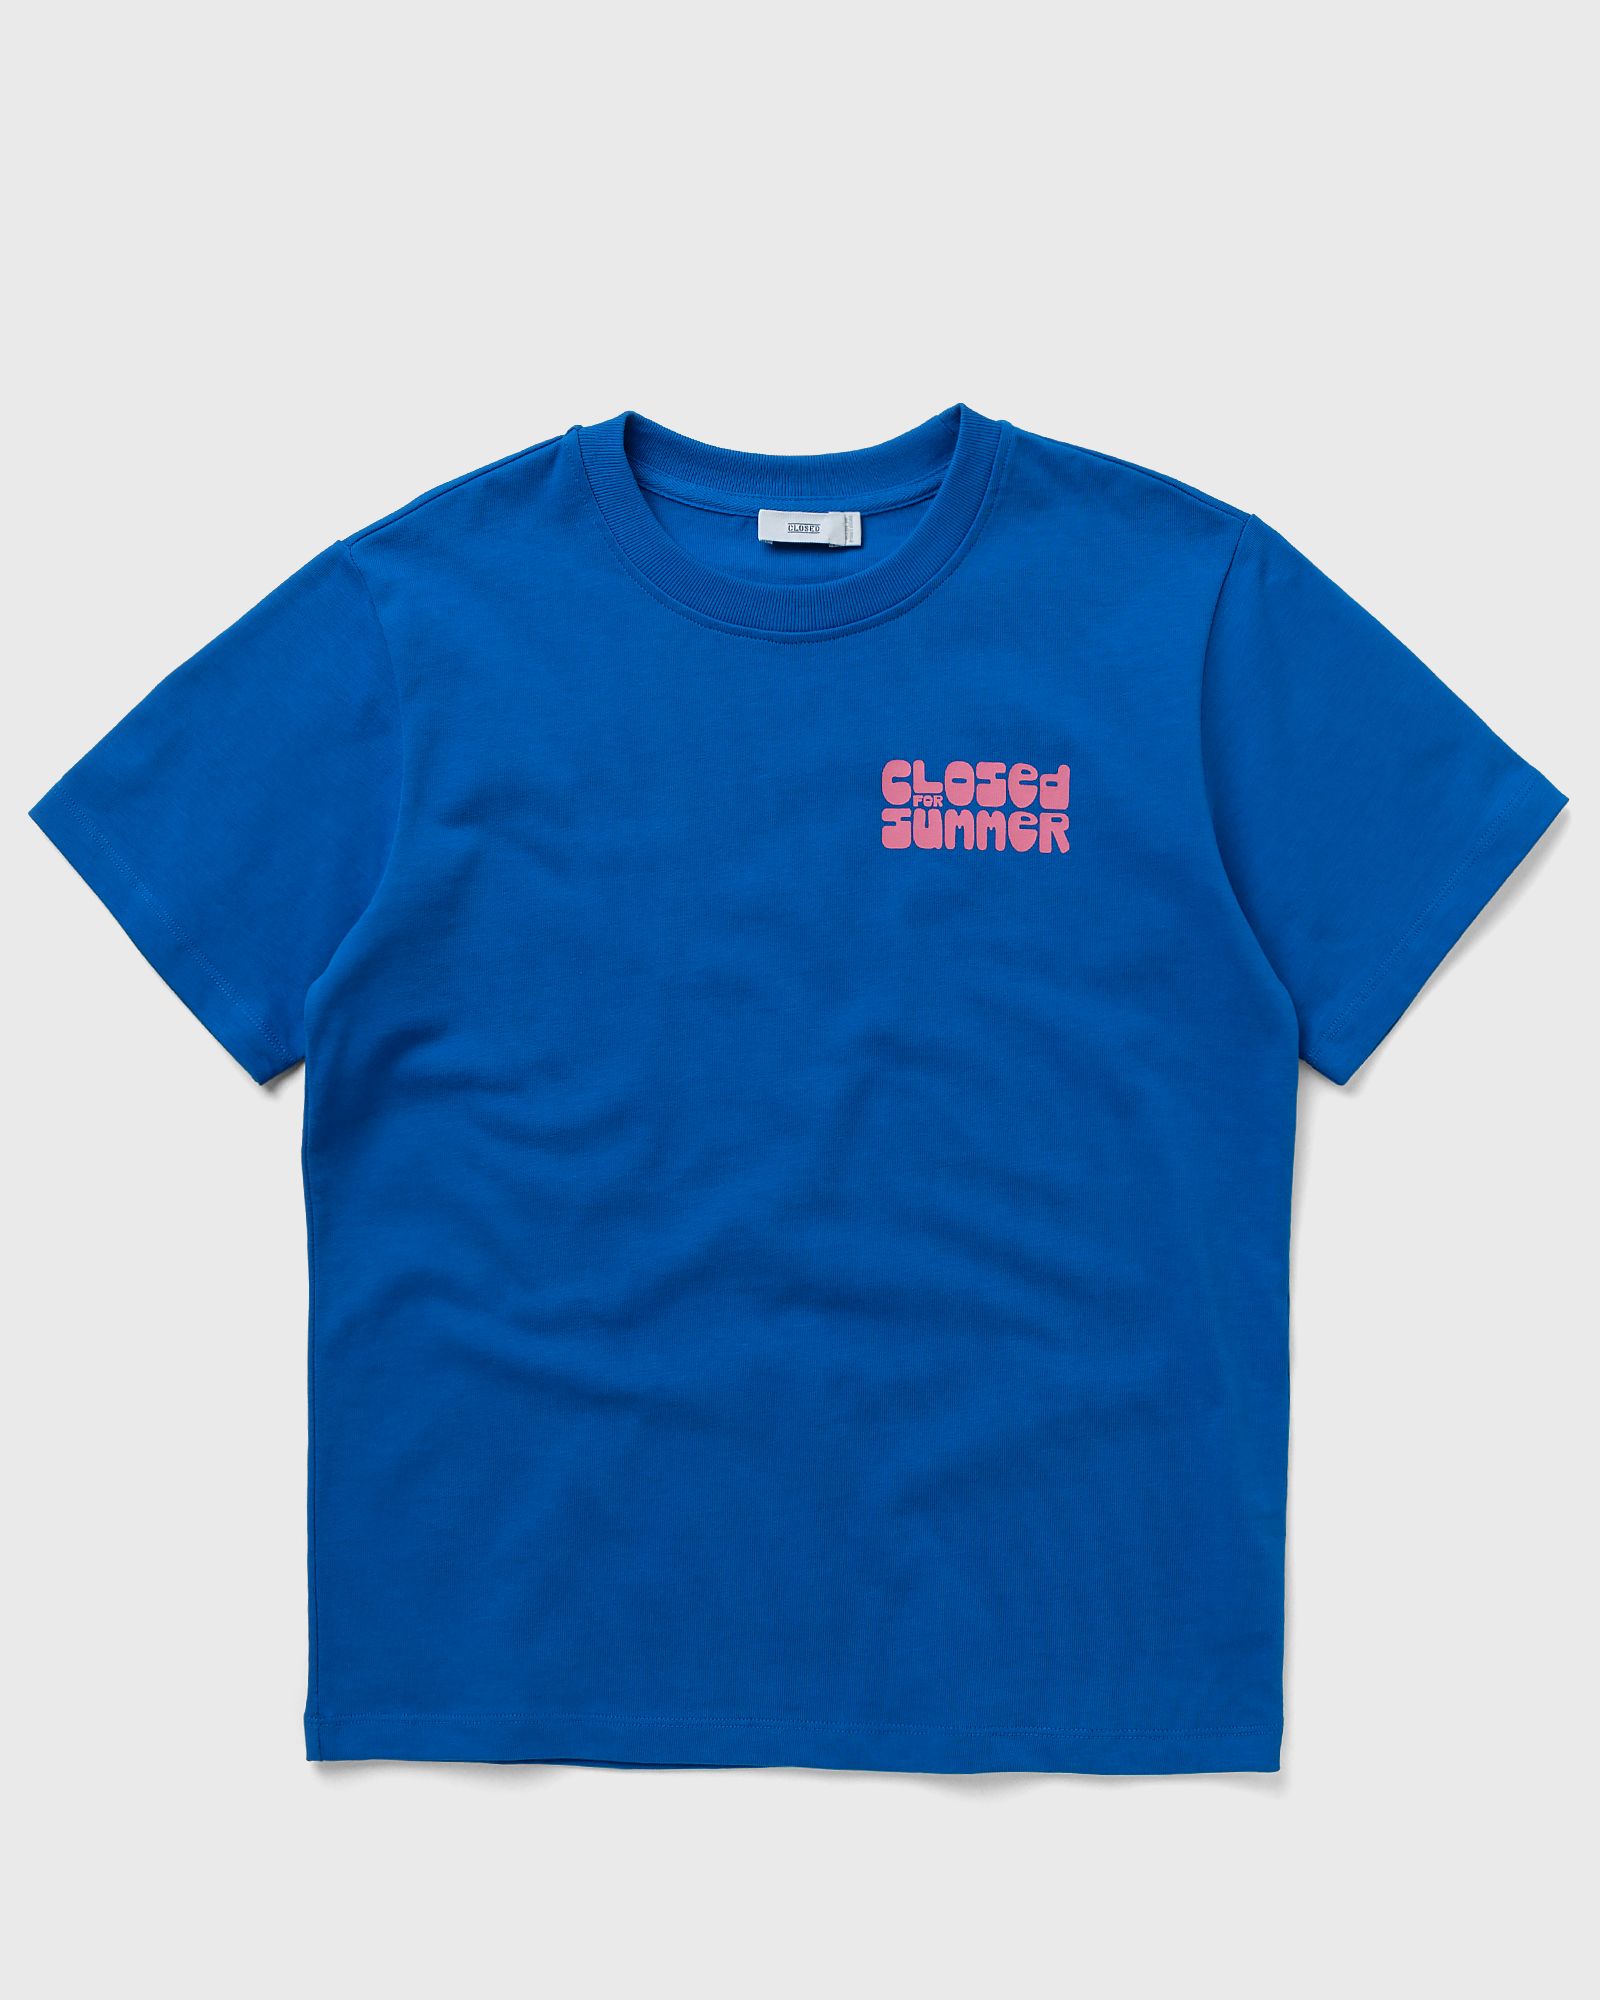 CLOSED - printed t-shirt women shortsleeves blue in größe:s